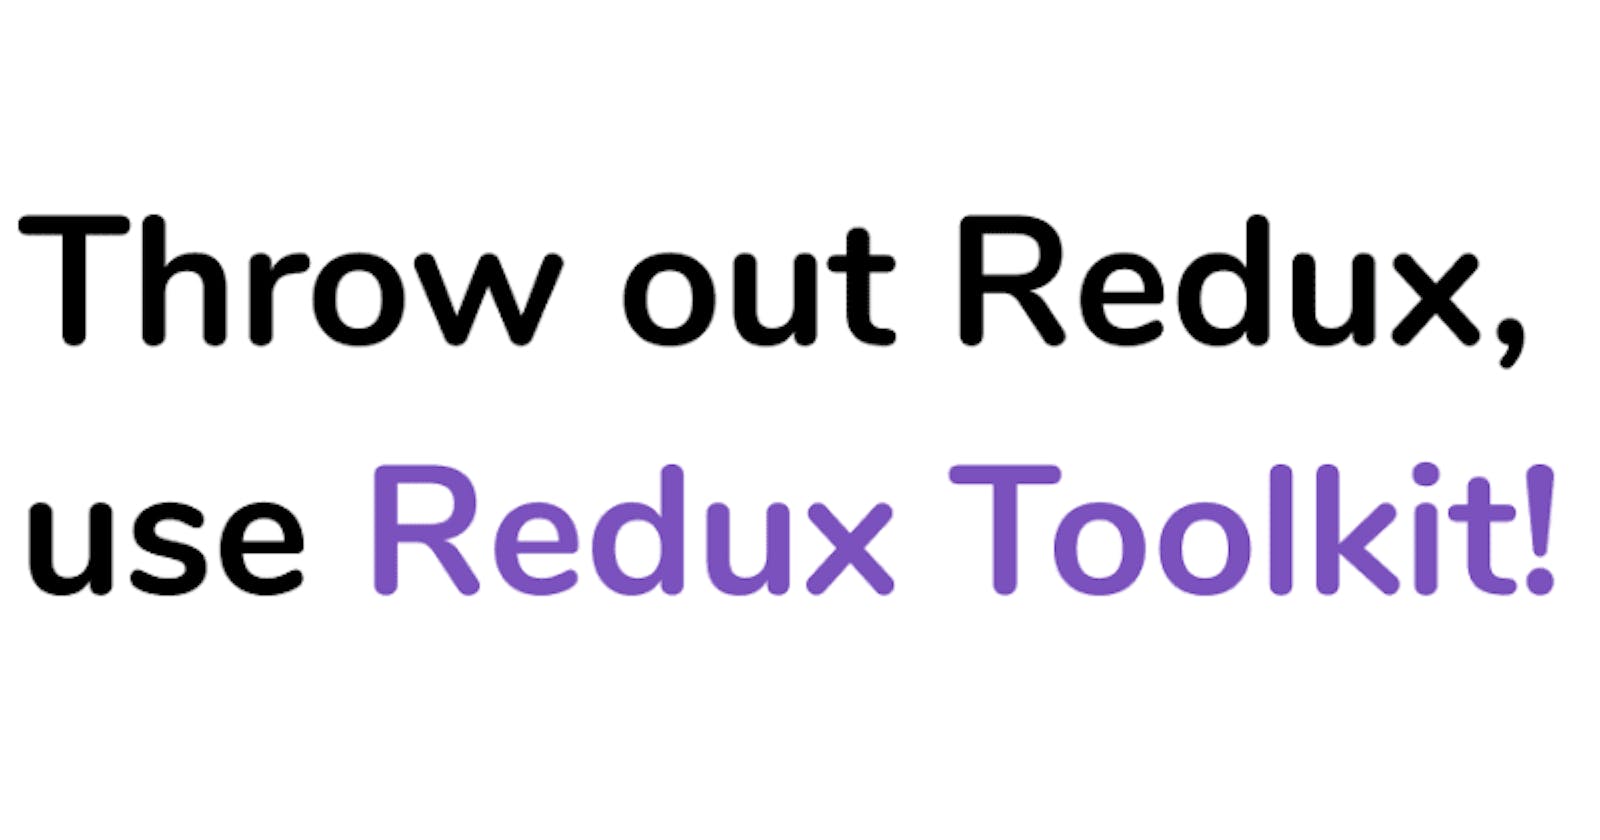 Throw out Redux, use Redux Toolkit